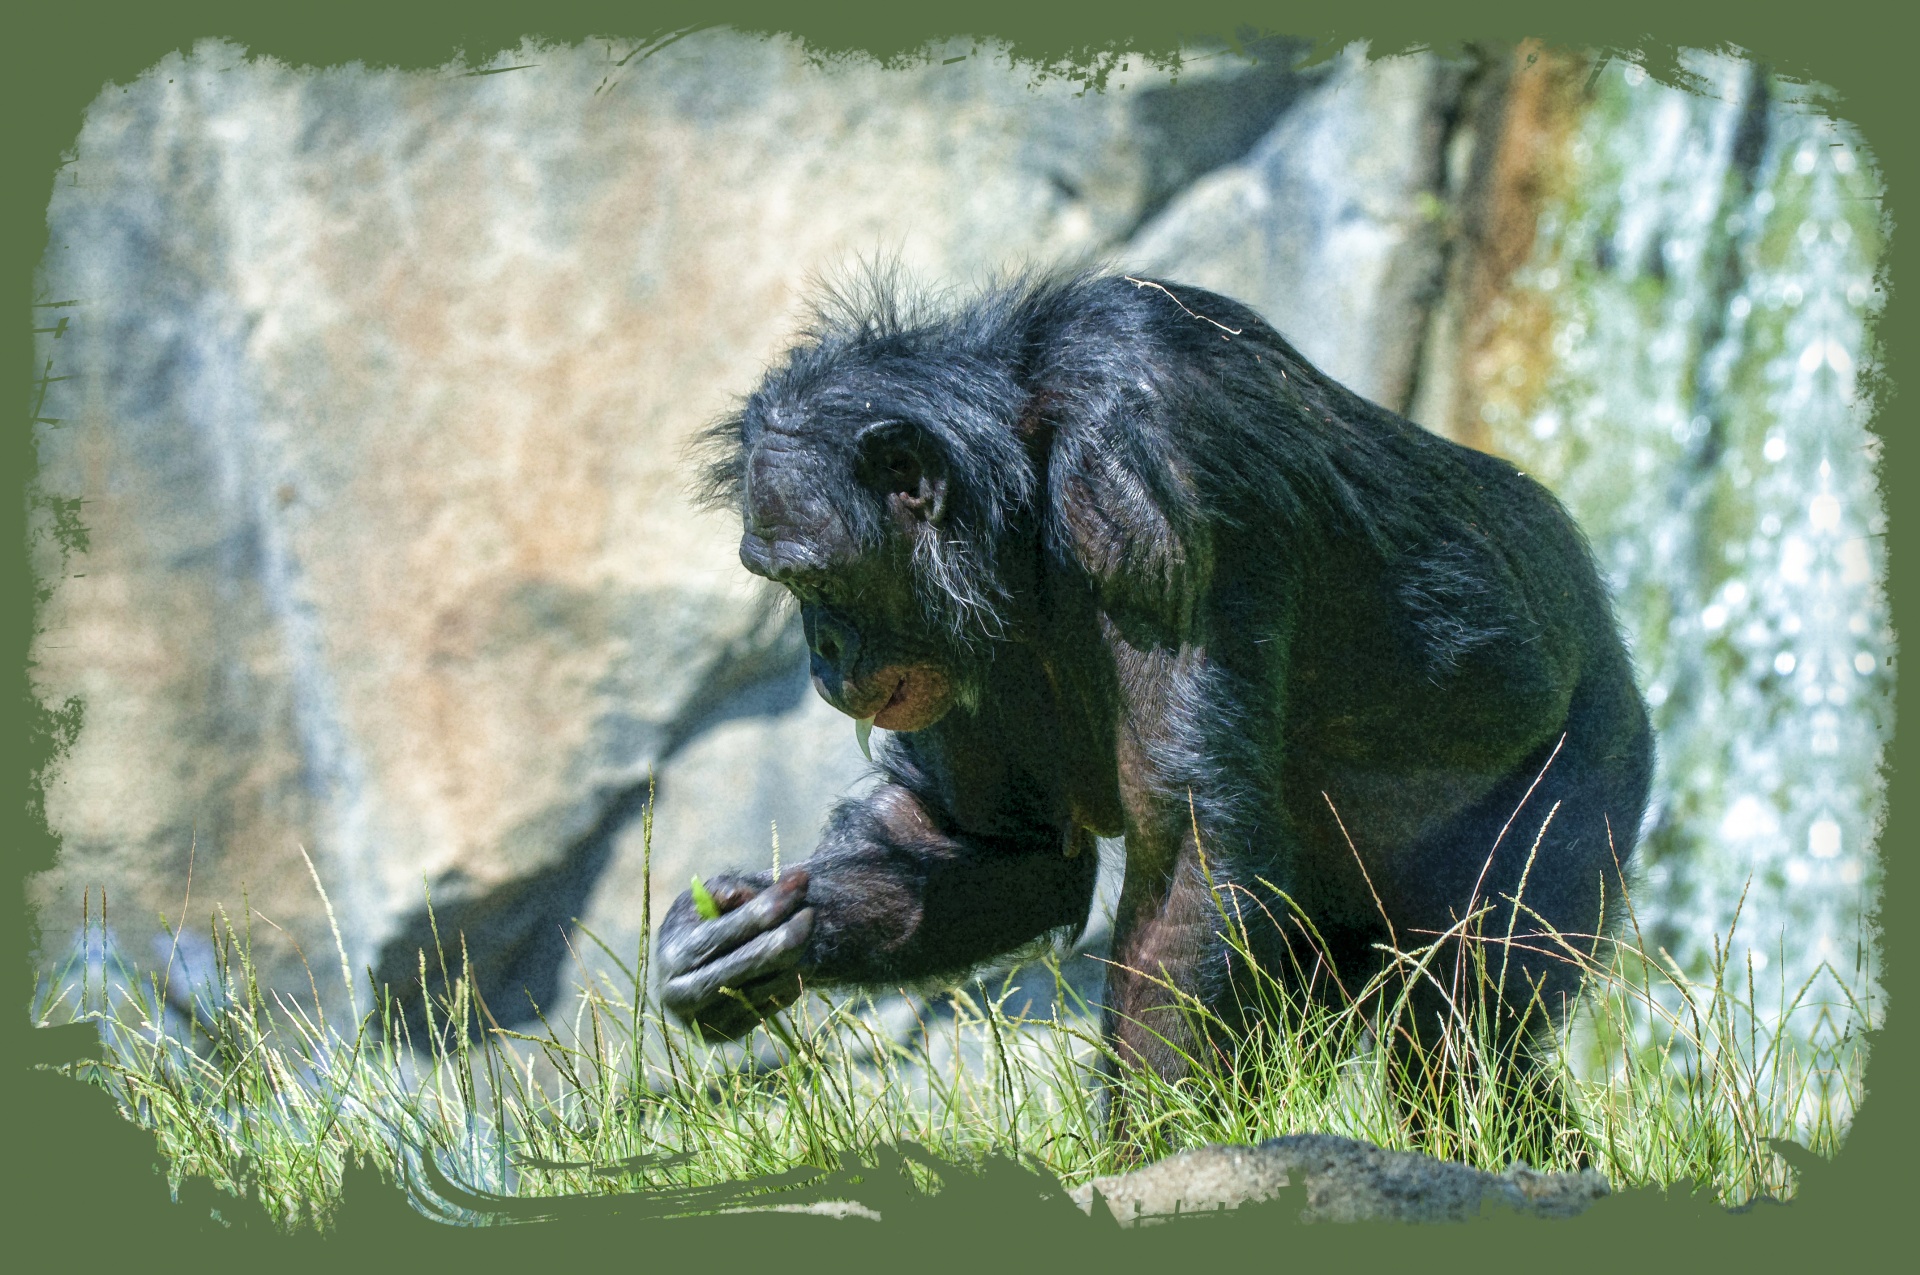 chimp contemplating a blade of grass